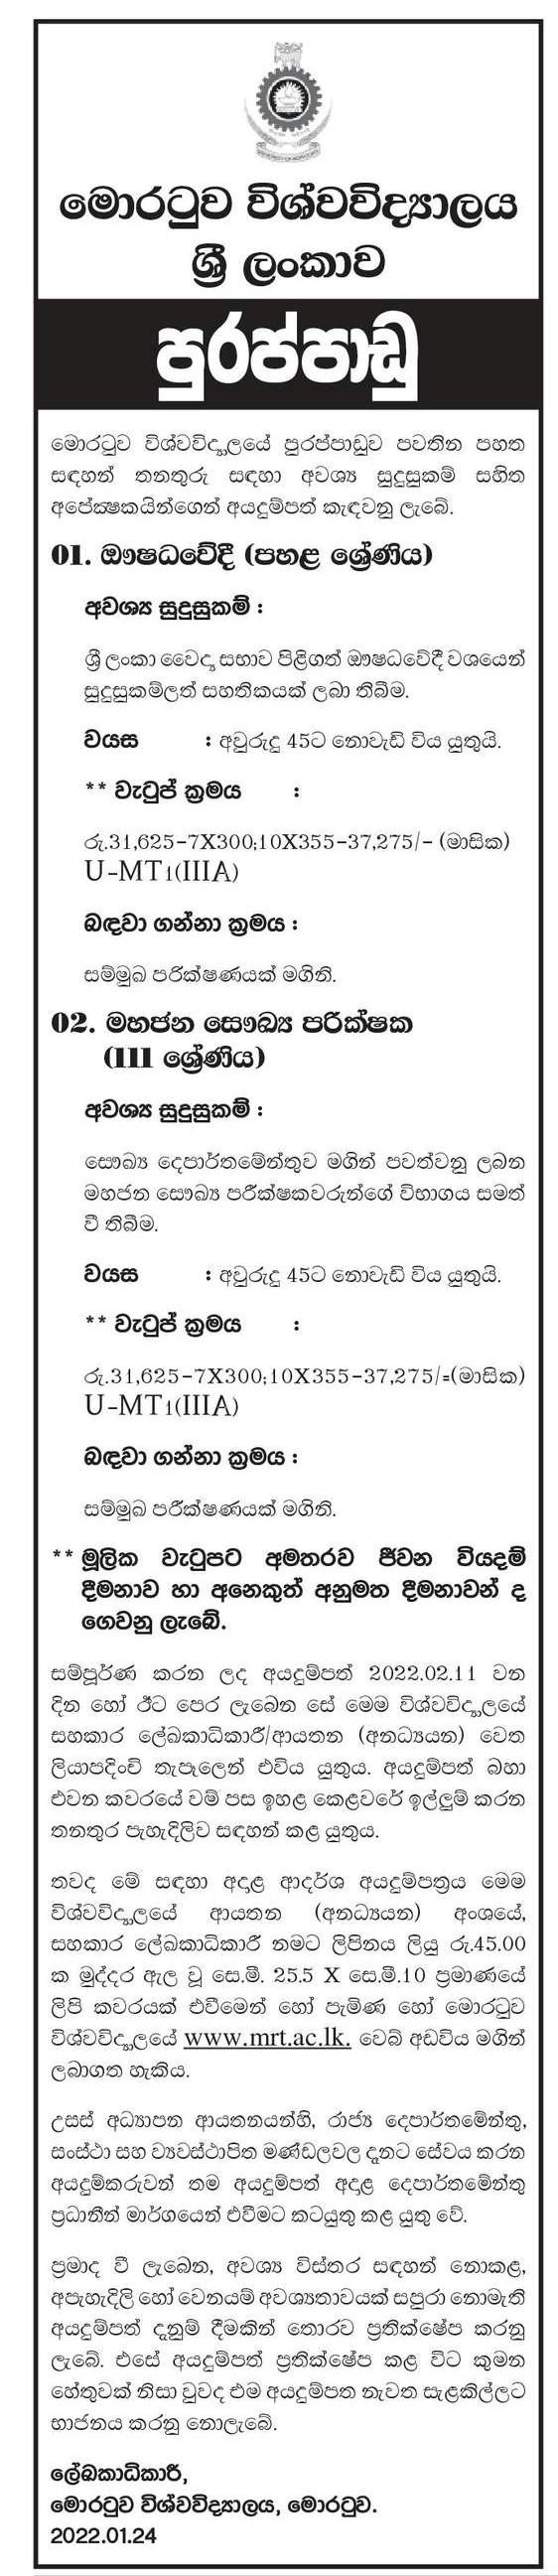 Pharmacist & Public Health Inspector University of Moratuwa Sinhala